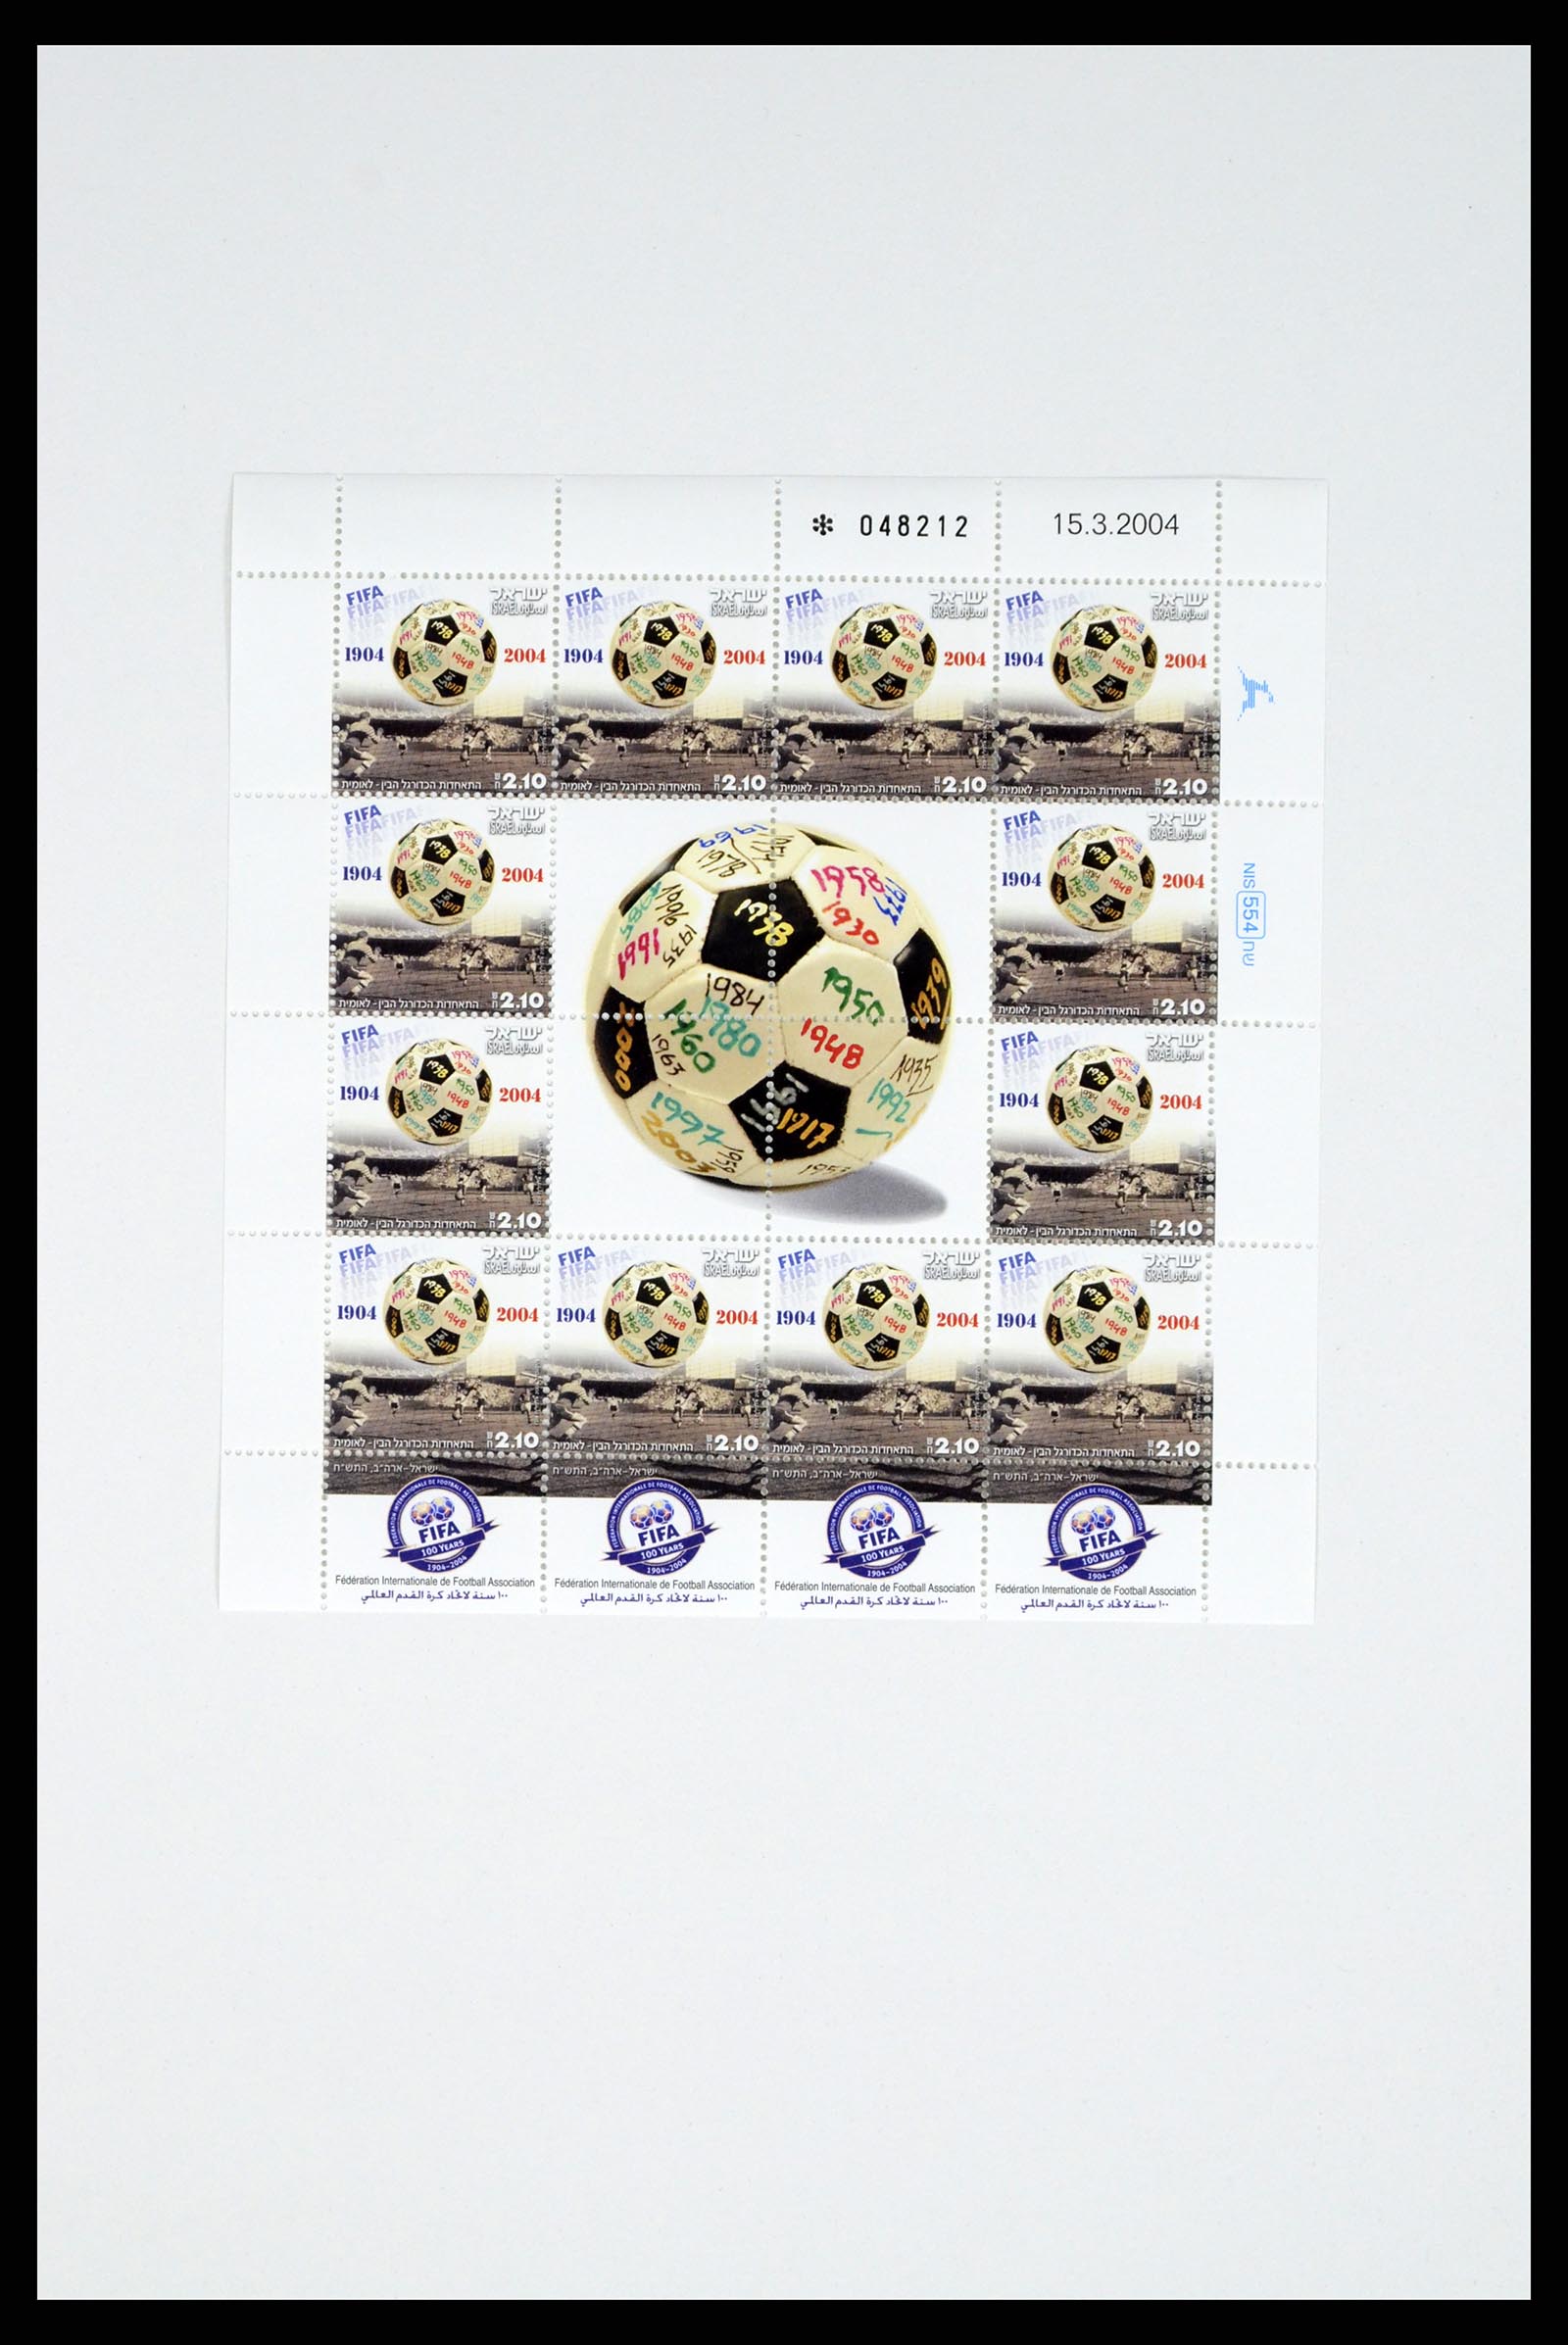 37779 334 - Stamp collection 37779 Israel sheetlets 1986-2009.